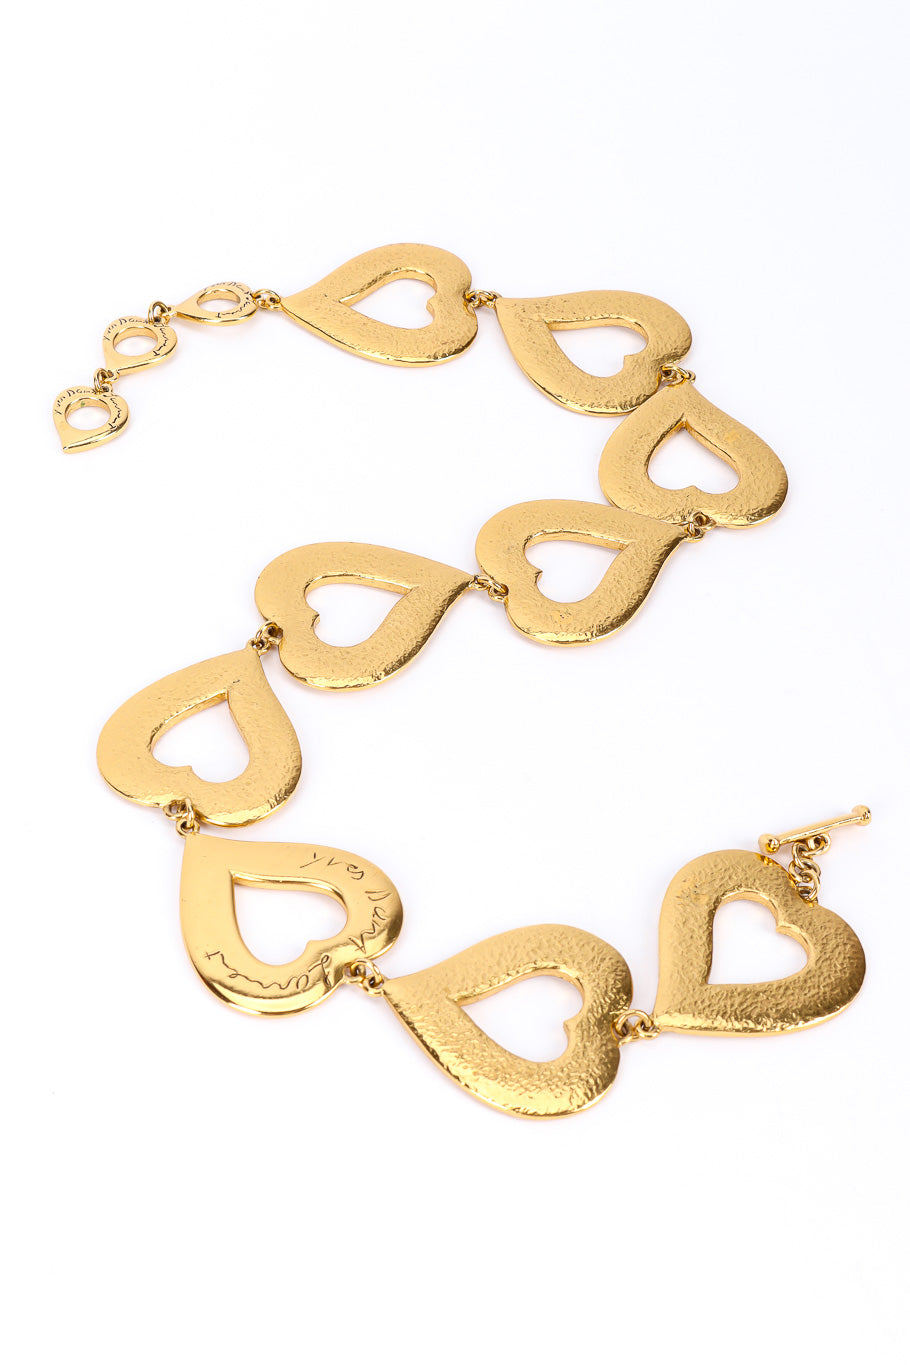 Vintage Yves Saint Laurent Heart Pendant Collar Necklace full view unclasped @Recessla